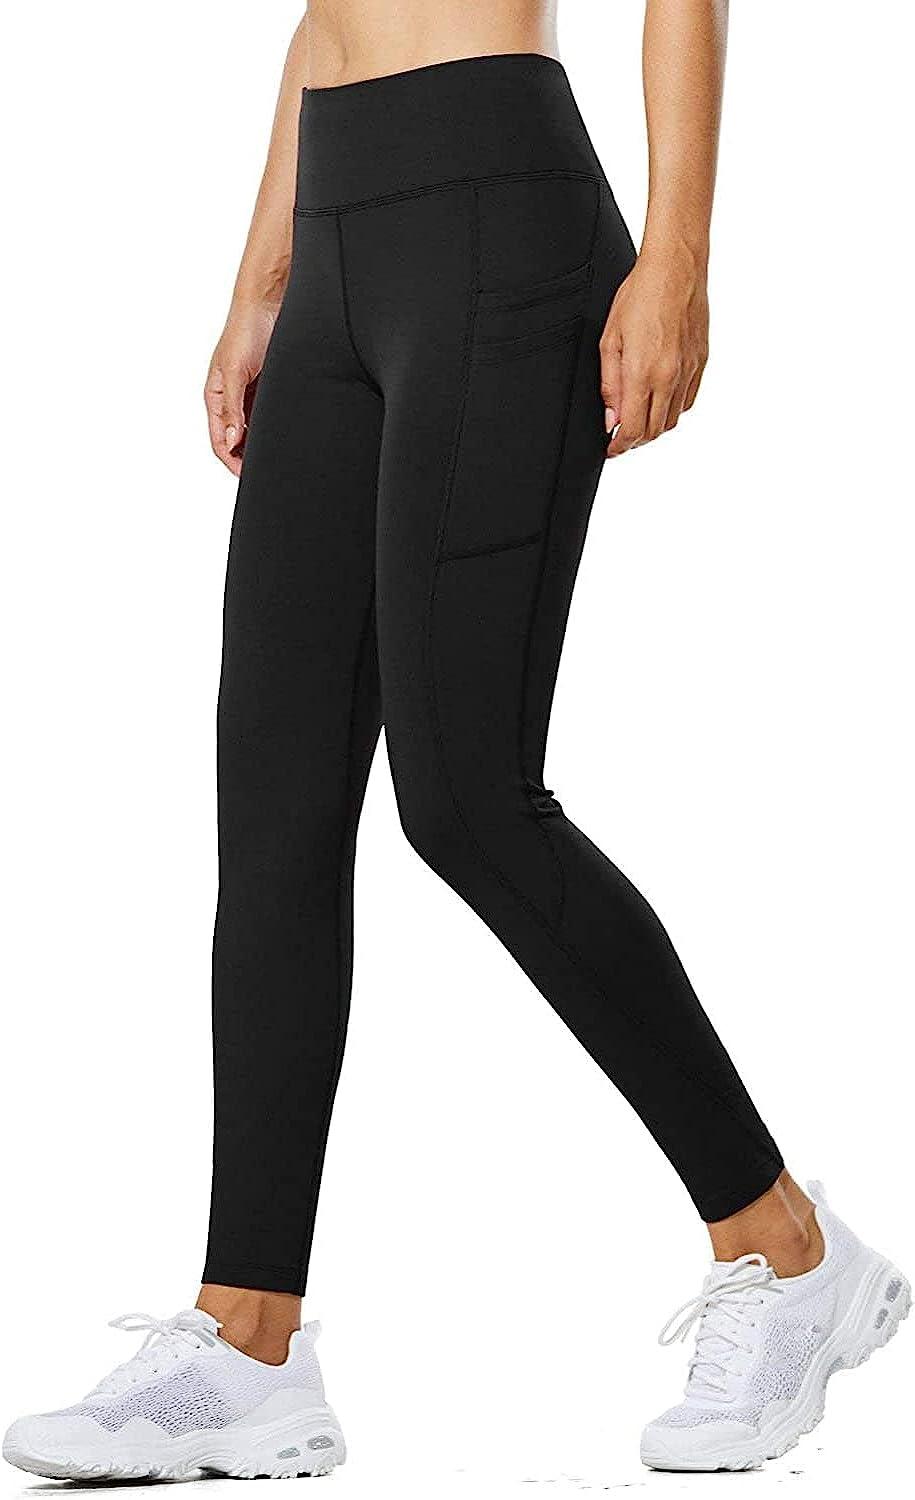 BALEAF Women's Fleece Lined Water Resistant Legging High Waisted Thermal  Winter Hiking Running Pants Pockets Medium Black